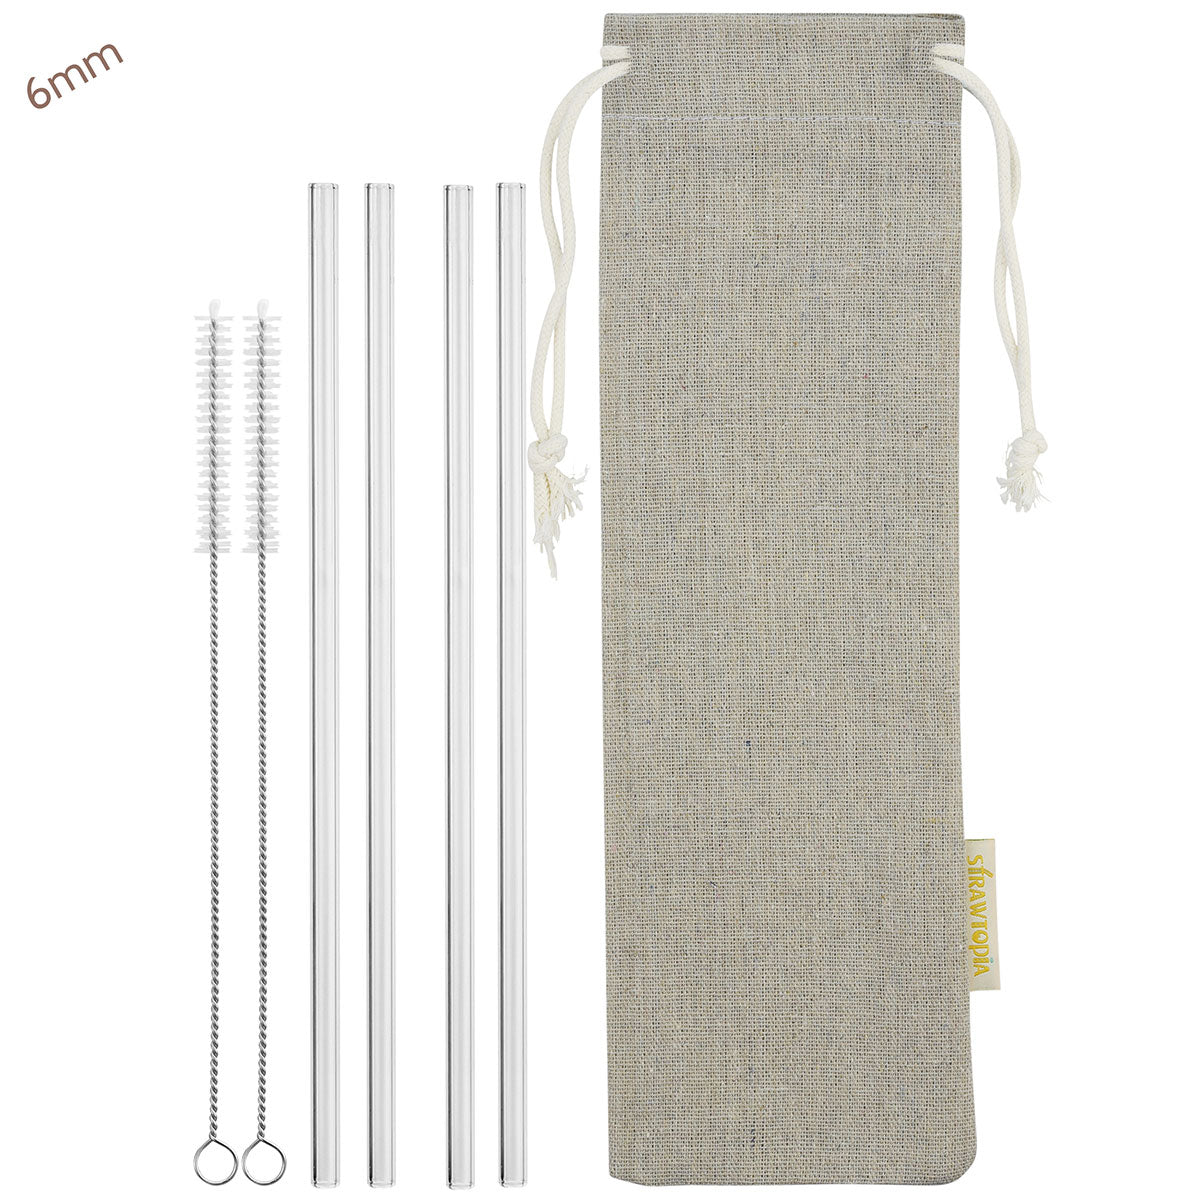 Gentleman Glass Straw Set - 4 Glass Straws + 1 Cleaning Brush 1 set